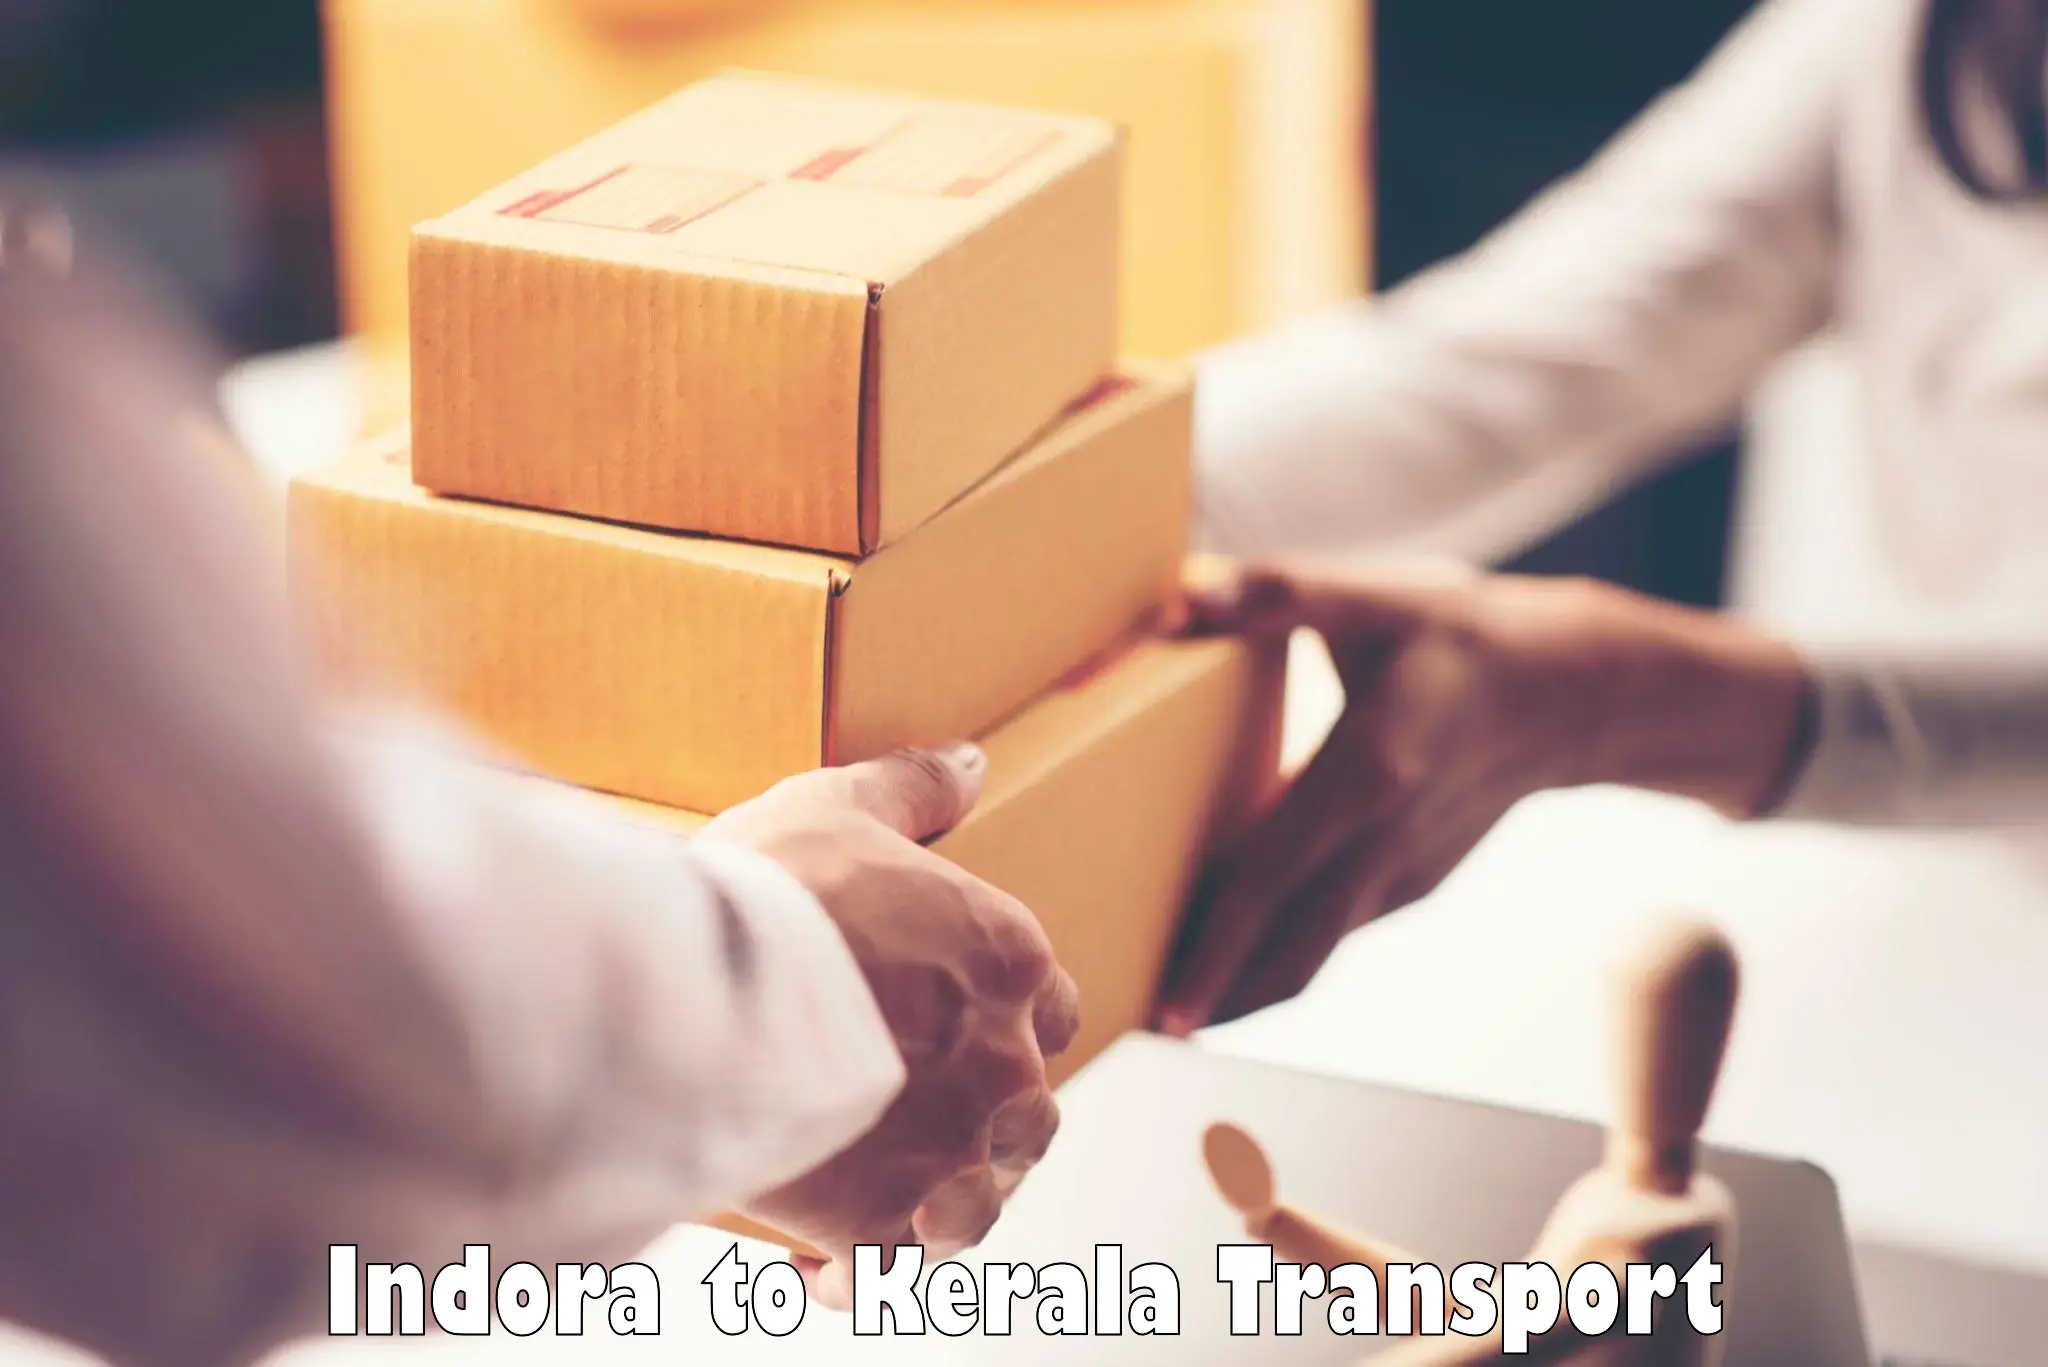 Transport in sharing Indora to Perinthalmanna